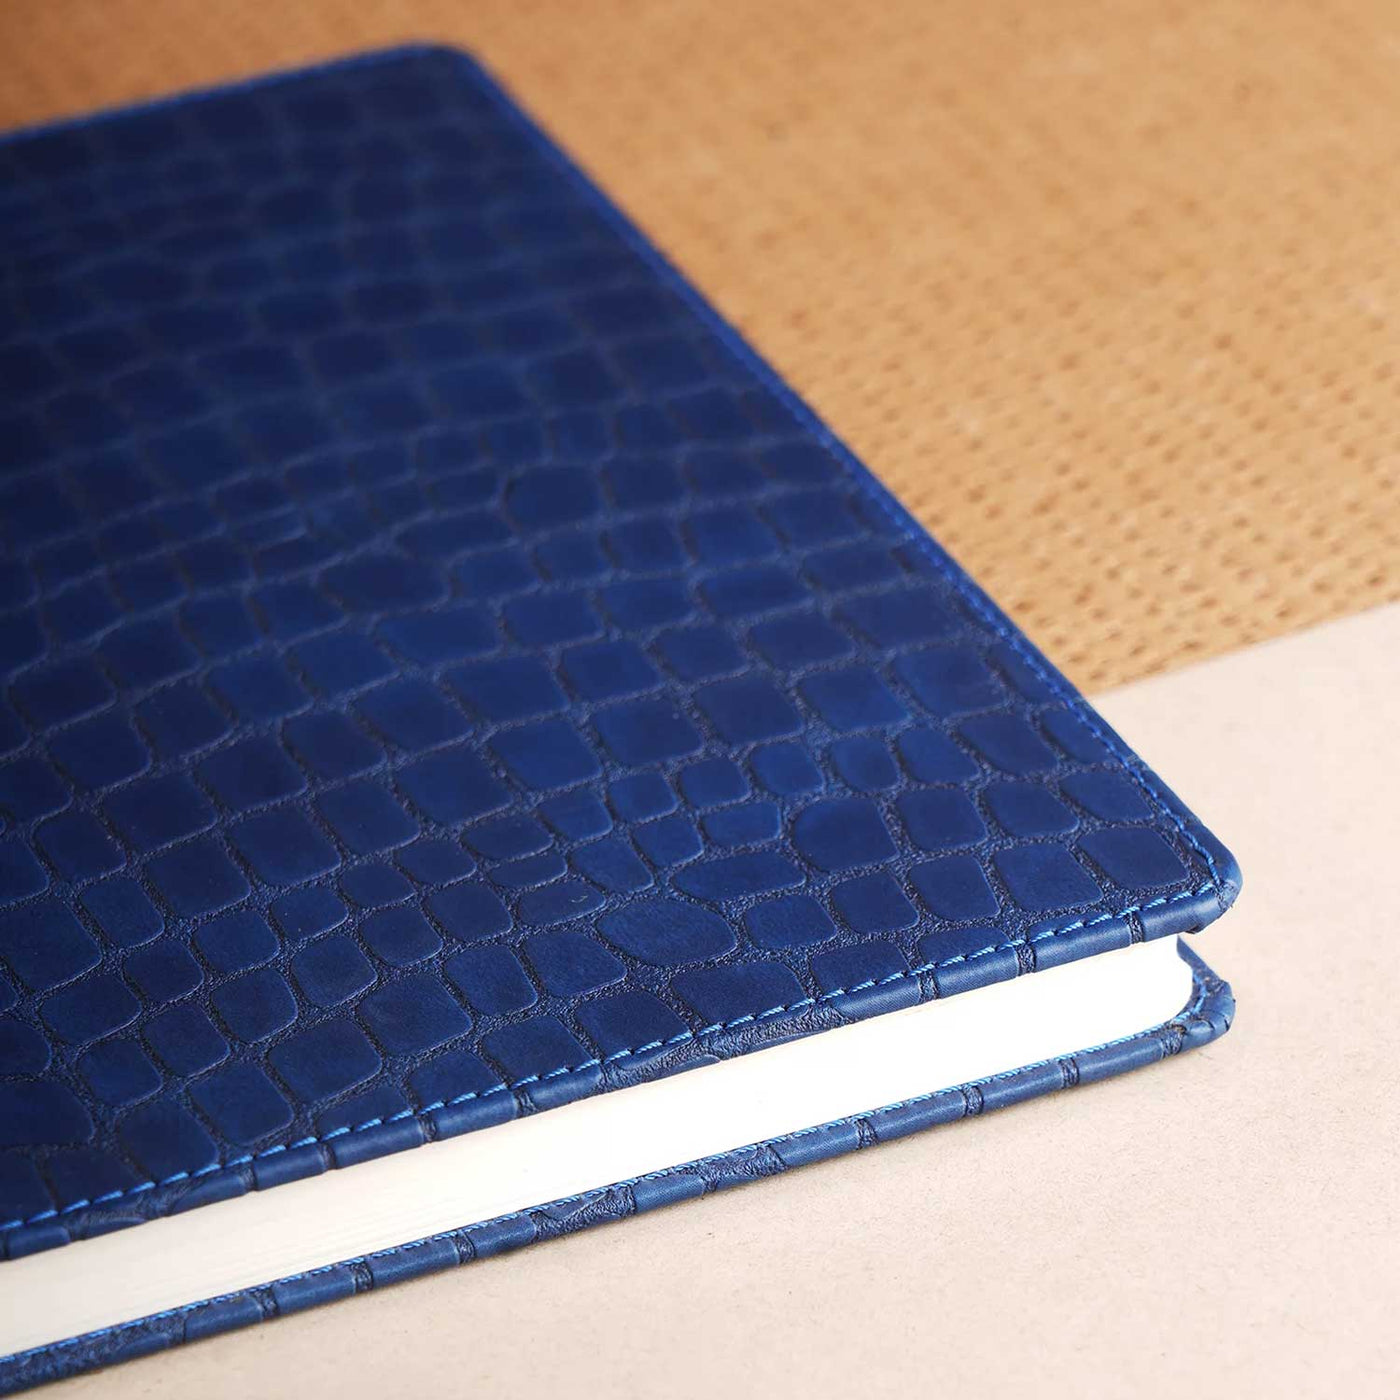 Scholar Croco Blue Notebook - A5 Ruled 6